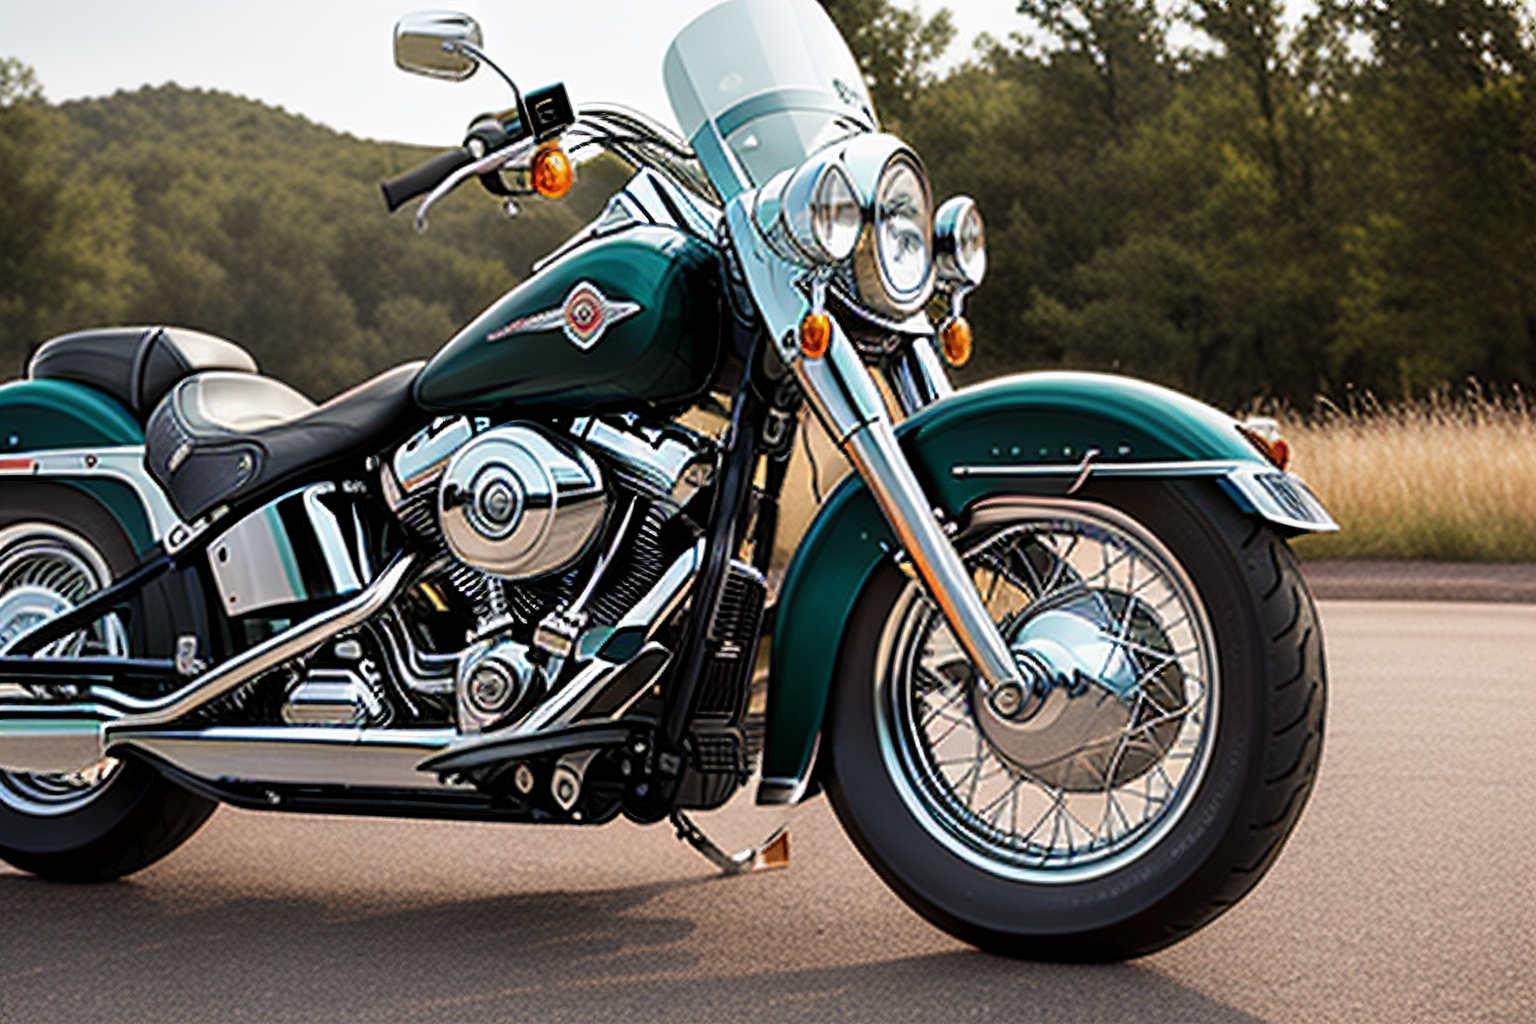 2012 Harley Davidson Heritage Softail Classic Problems